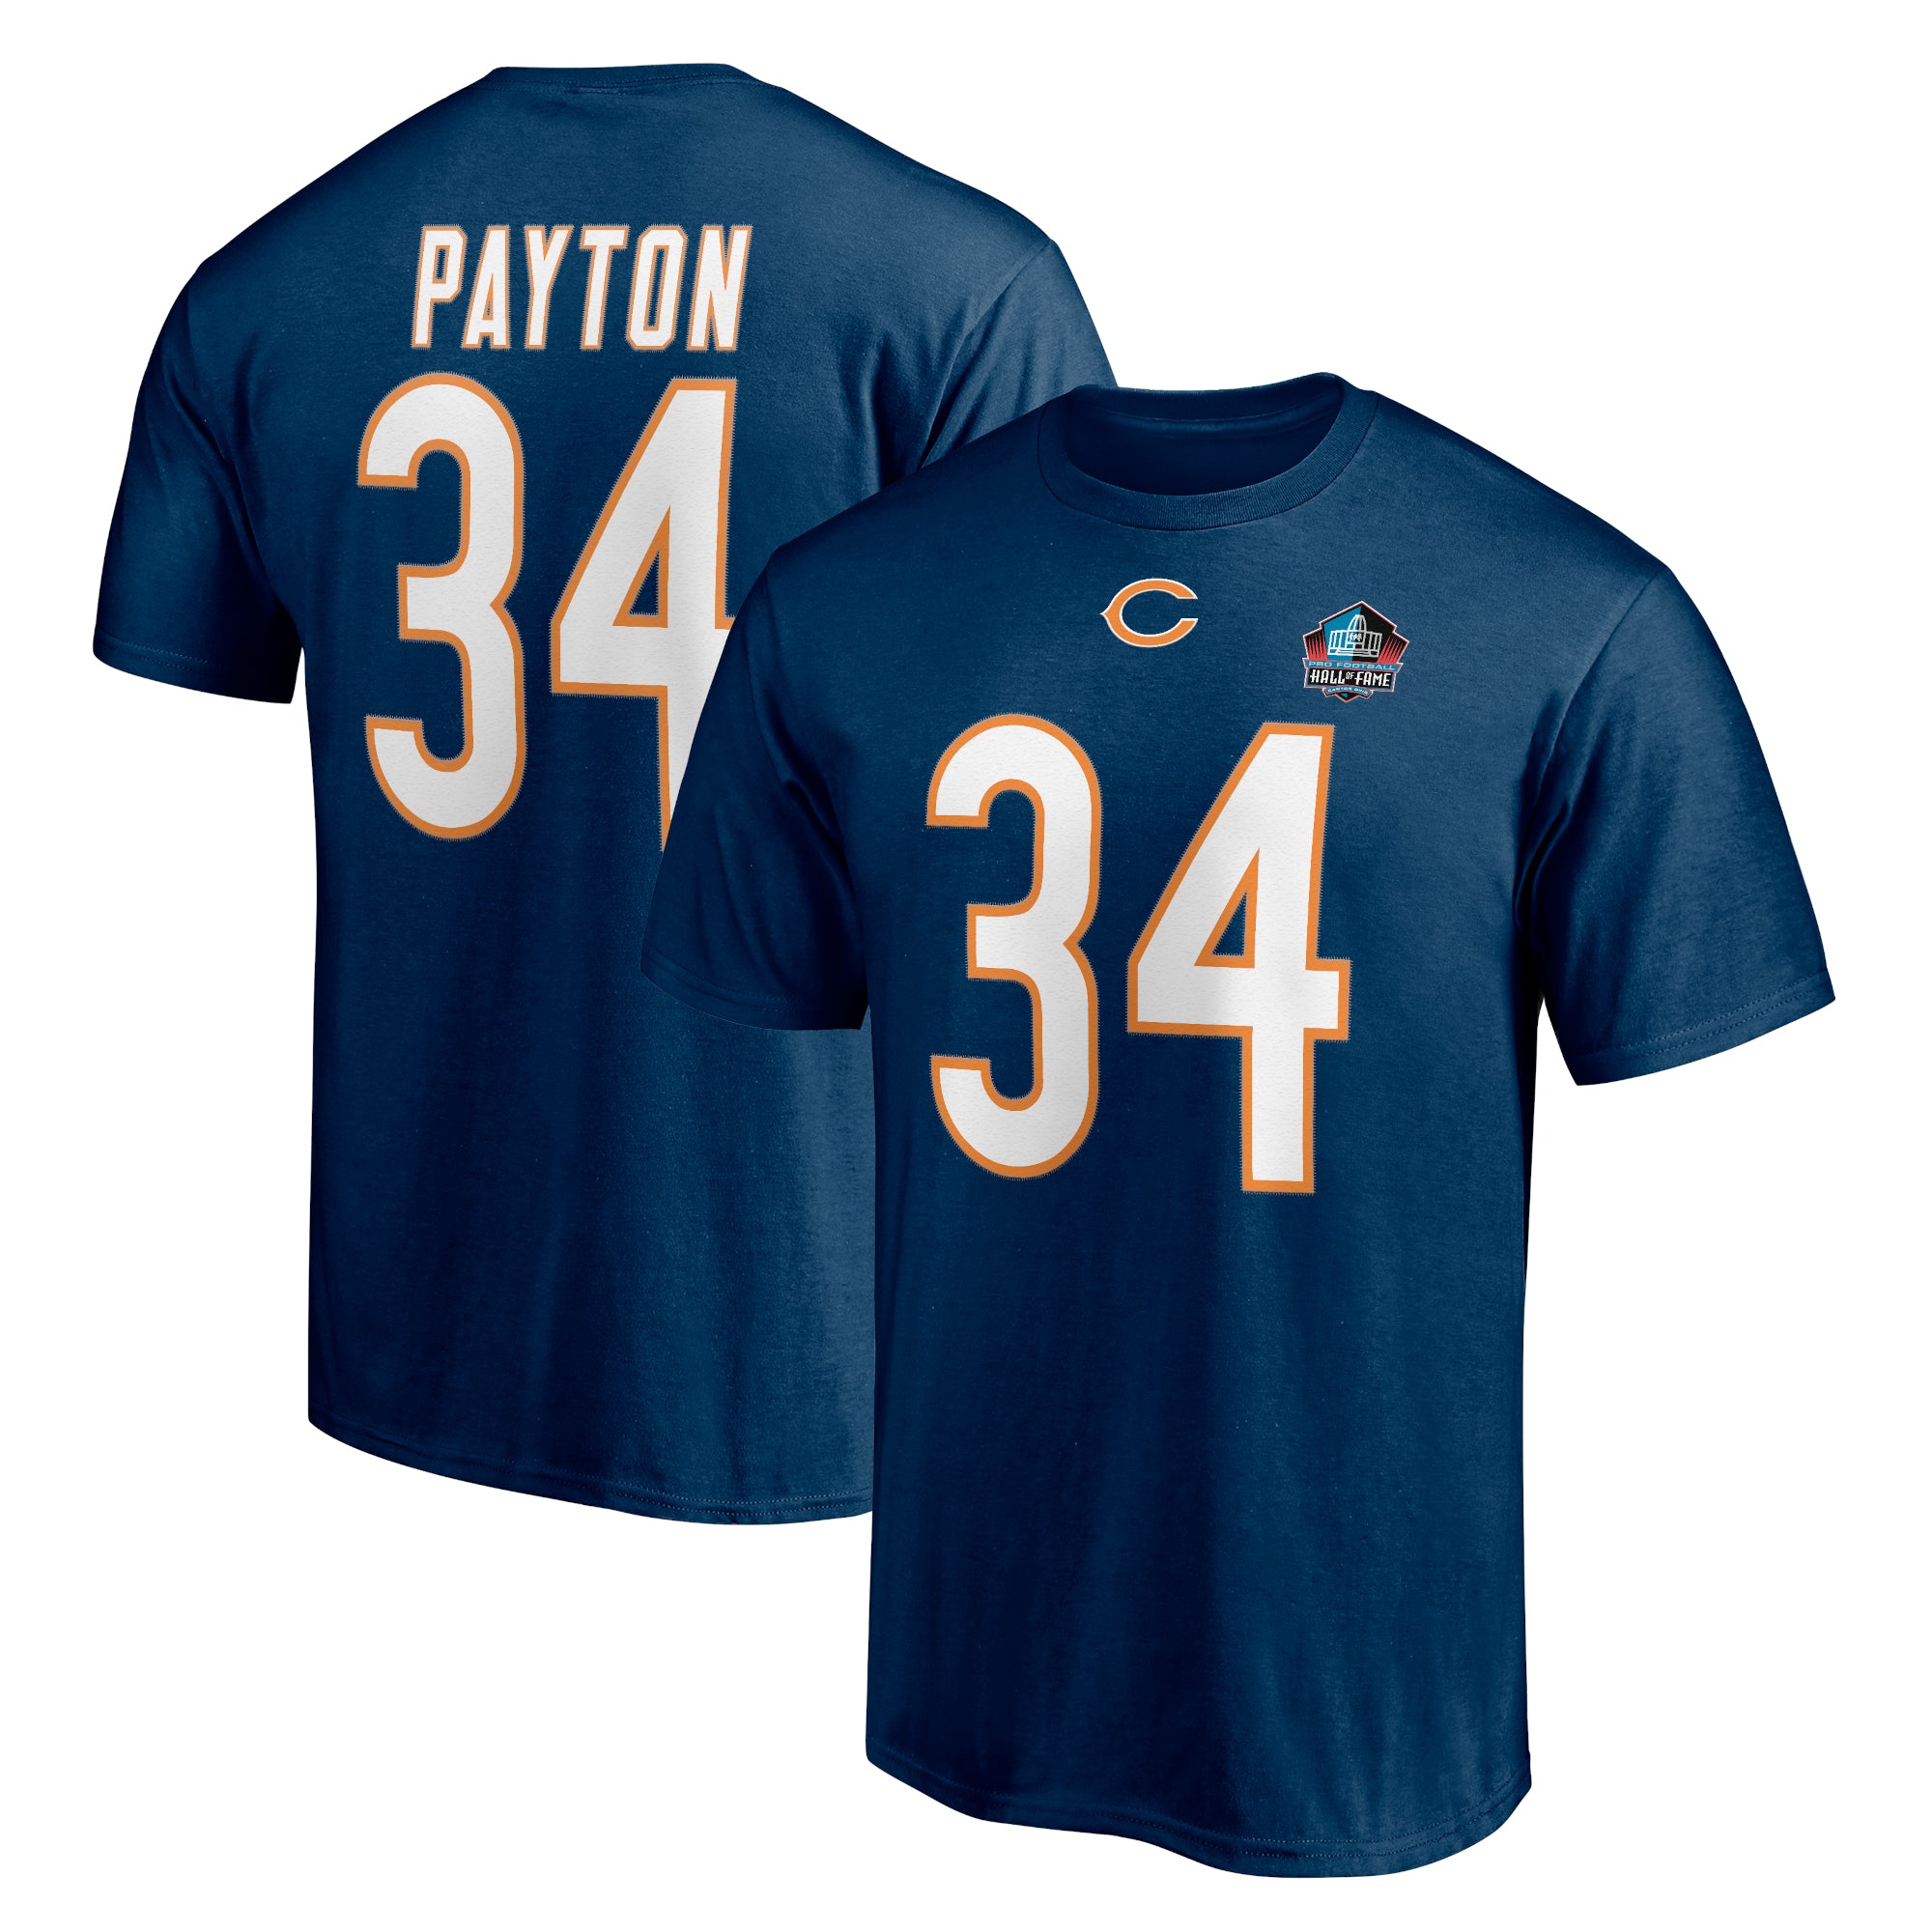 Fanatics Walter Payton 34 Chicago Bears Hall of Fame T-Shirt 3X-Large